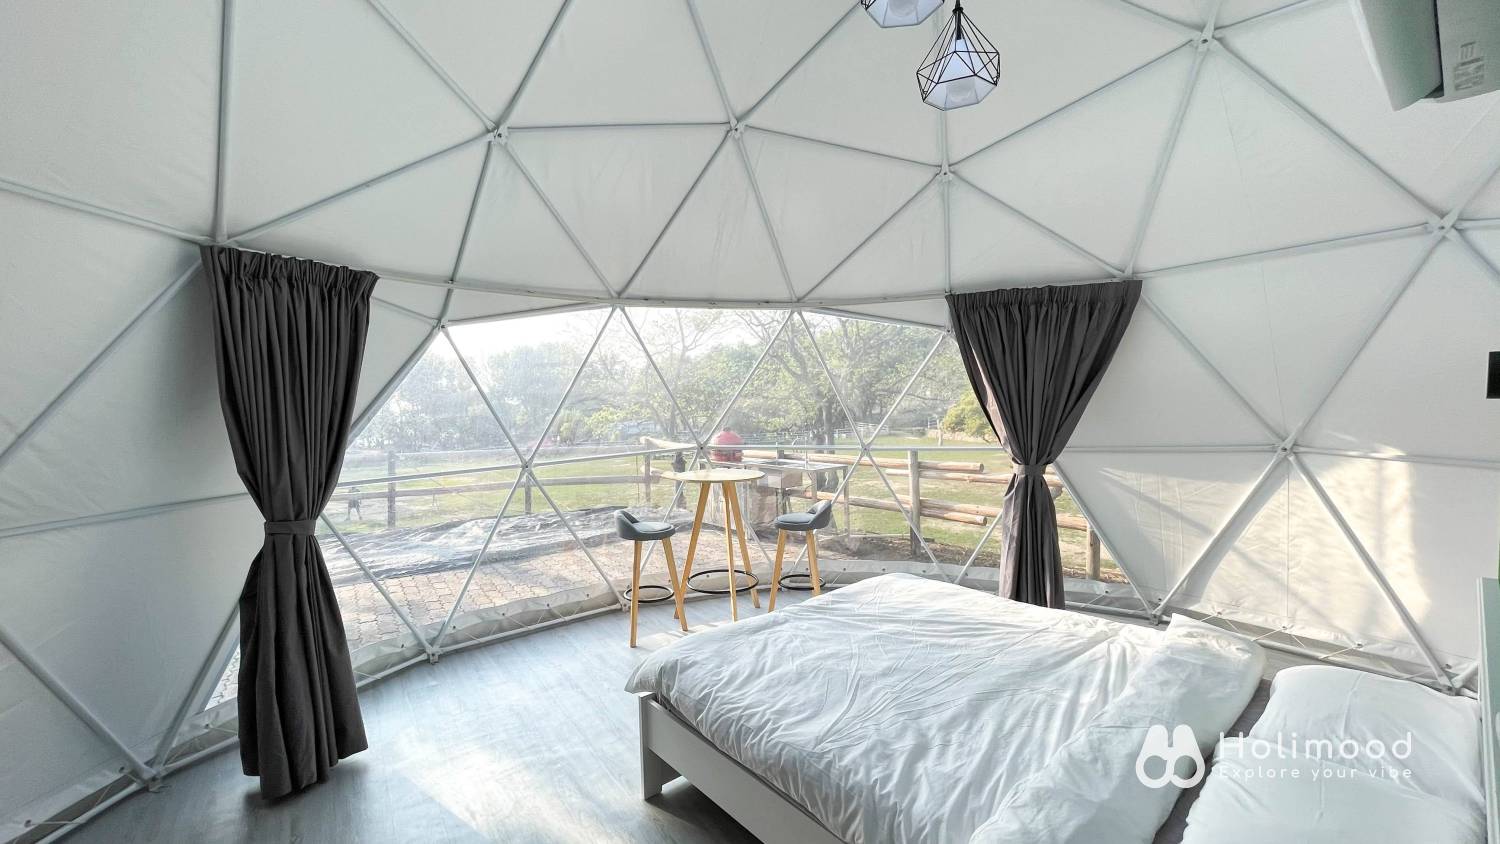 Sai Yuen Camping Adventure Park - Cheung Chau Campsite Cheung Chau Sai Yuen Stargazing tent -  Fantasy 14